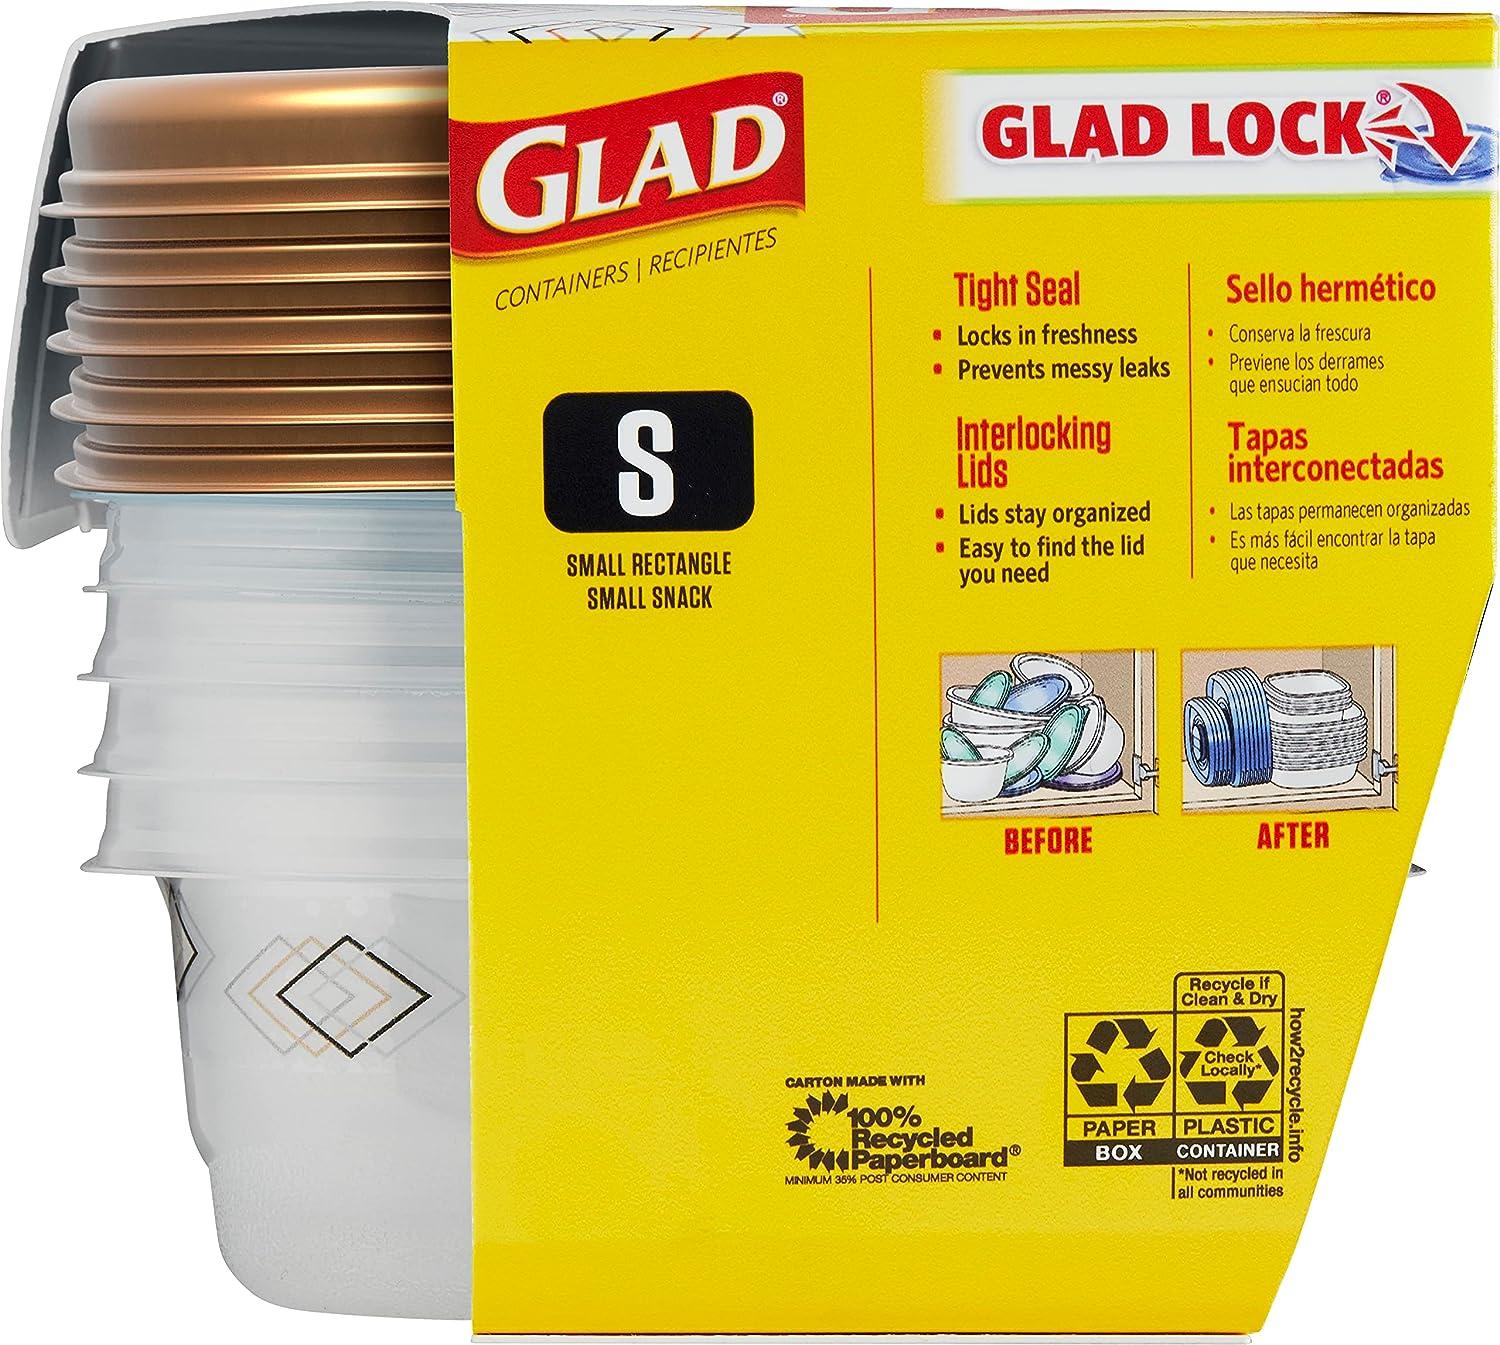 GladWare Design Series Food Storage Containers 9 Oz, 5 Ct